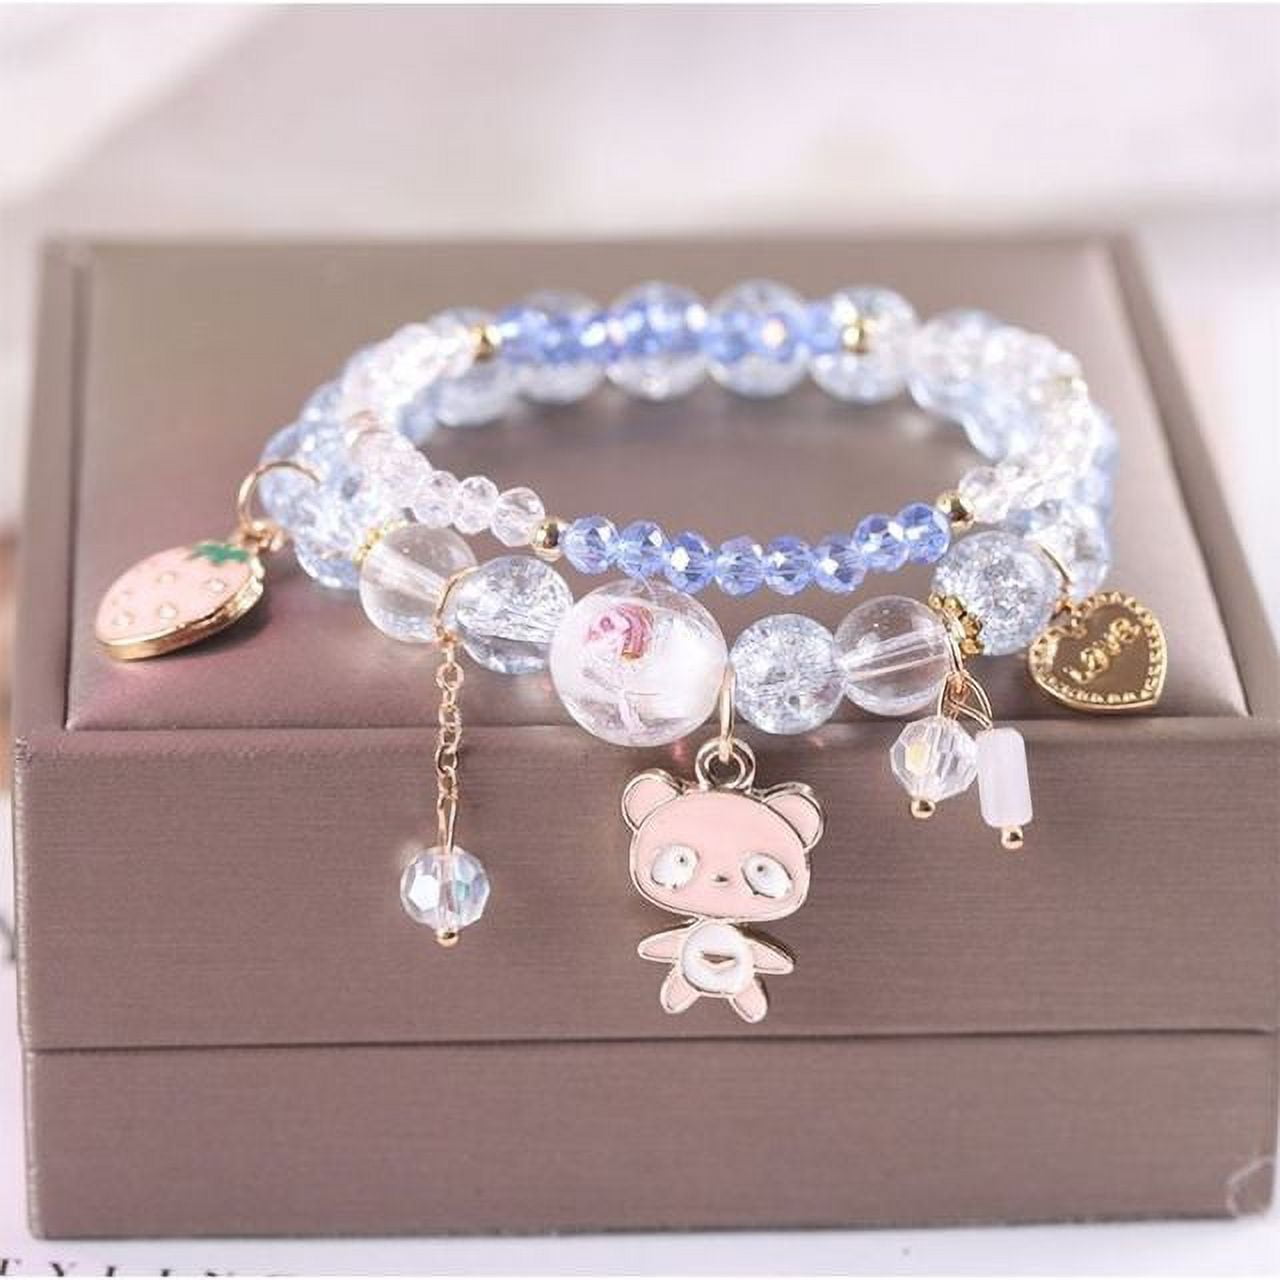 Takara Tomy Anime Kawaii Sanrio Hello Kitty Bracelet Charms Metal Beads Making Kit Kids Gift Jewelry Accessories, Girl's, Size: One size, Grey